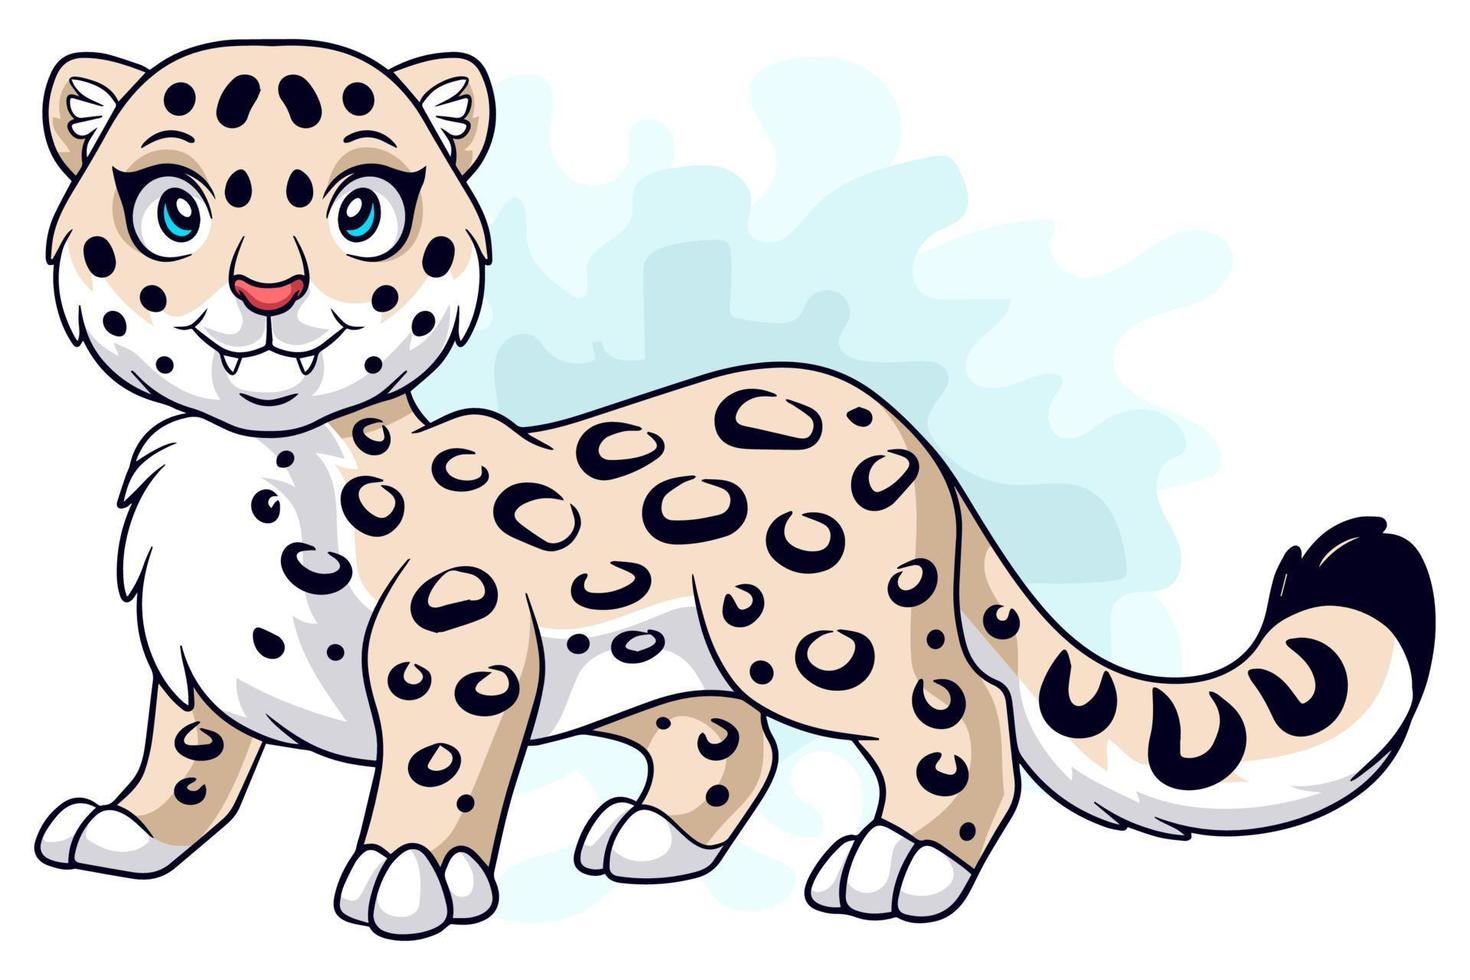 Cartoon funny snow leopard cartoon isolated on white background vector